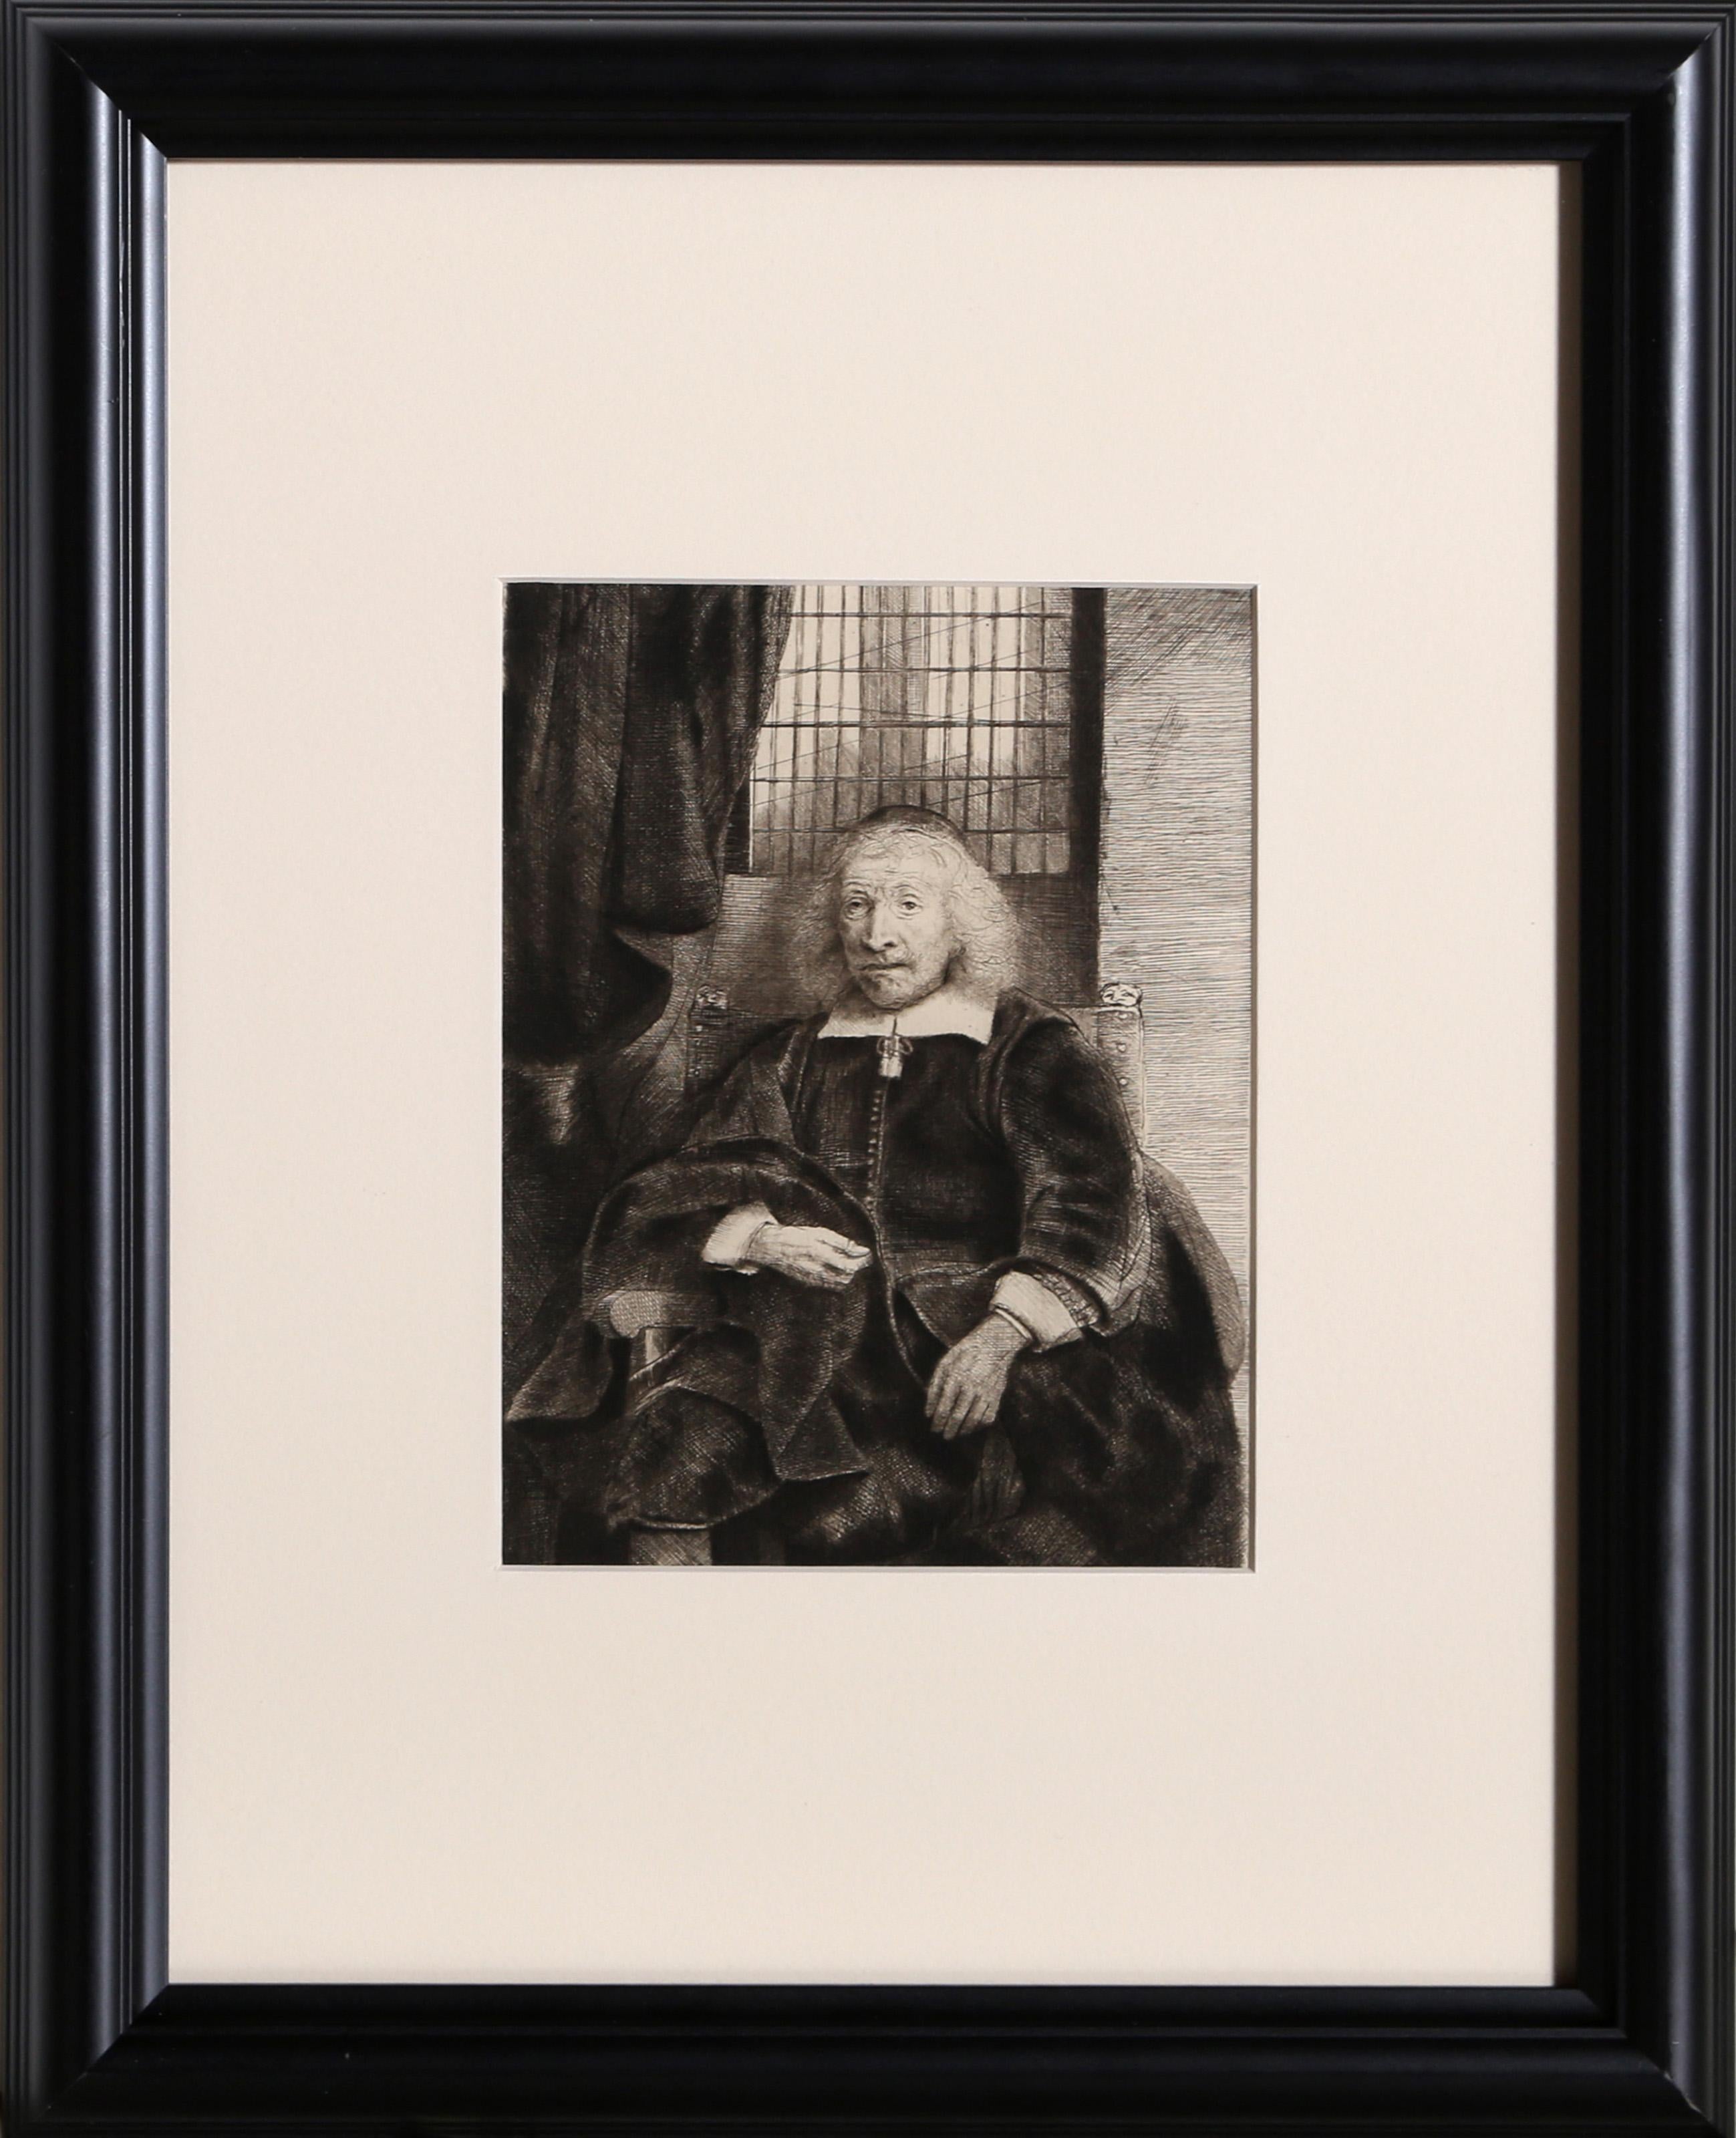 Artist: Rembrandt van Rijn, After by Amand Durand, Dutch (1606 - 1669) -  Haaring Levieux (B274), Year: 1878 (of original 1655), Medium: Heliogravure, Size: 7.75  x 6 in. (19.69  x 15.24 cm), Frame Size: 16 x 13 inches, Printer: Amand Durand,